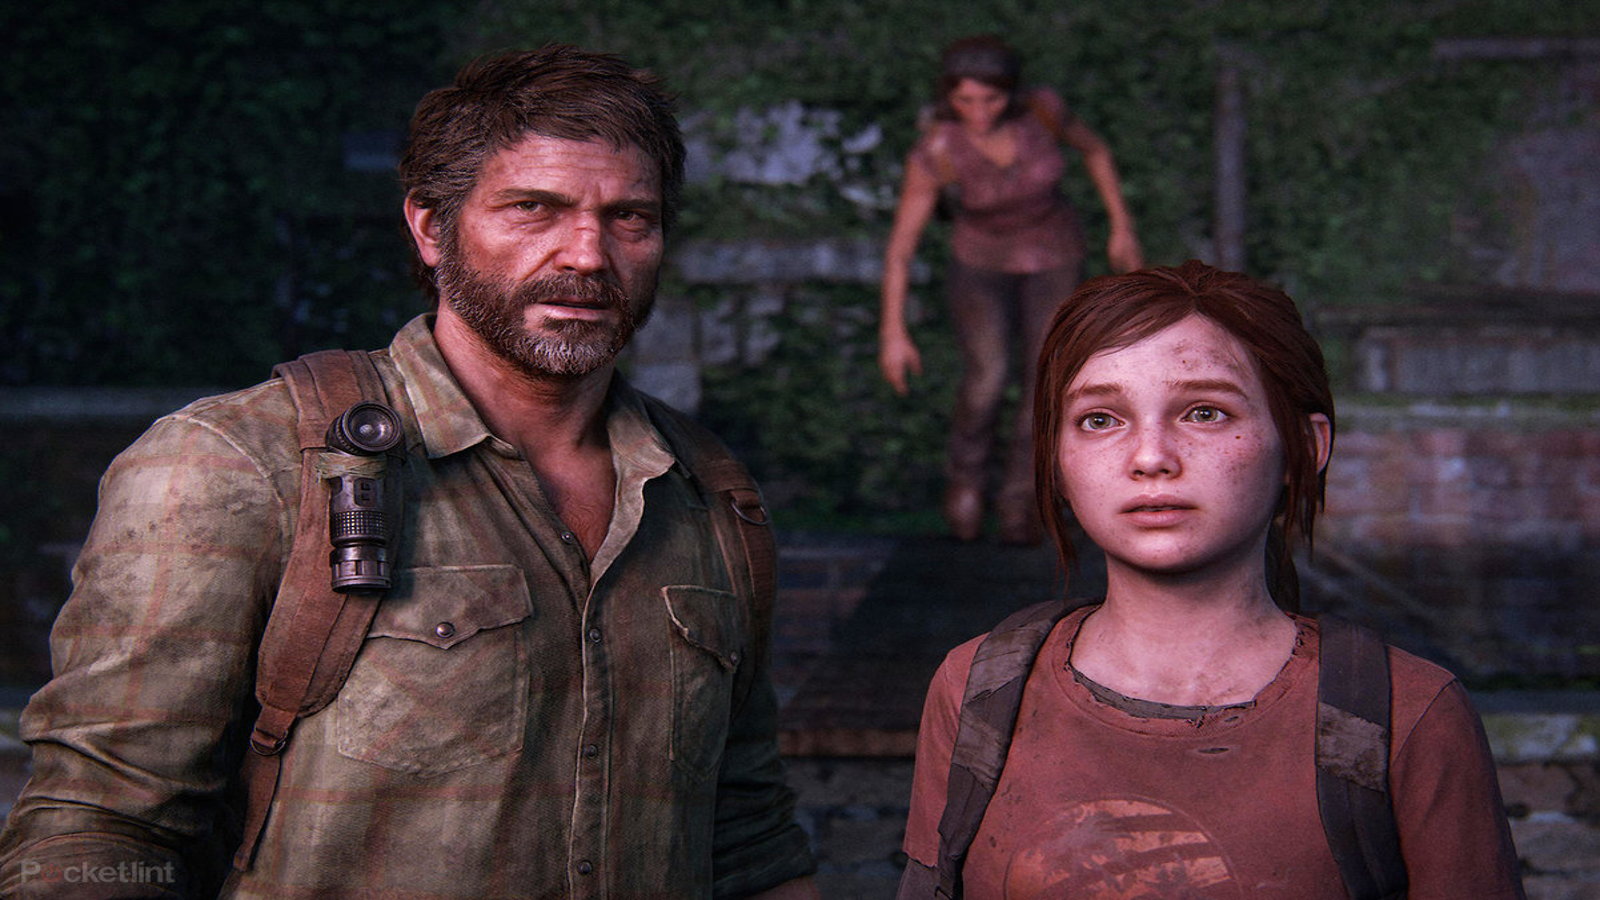 Jogo The Last of Us multiplayer está vivo